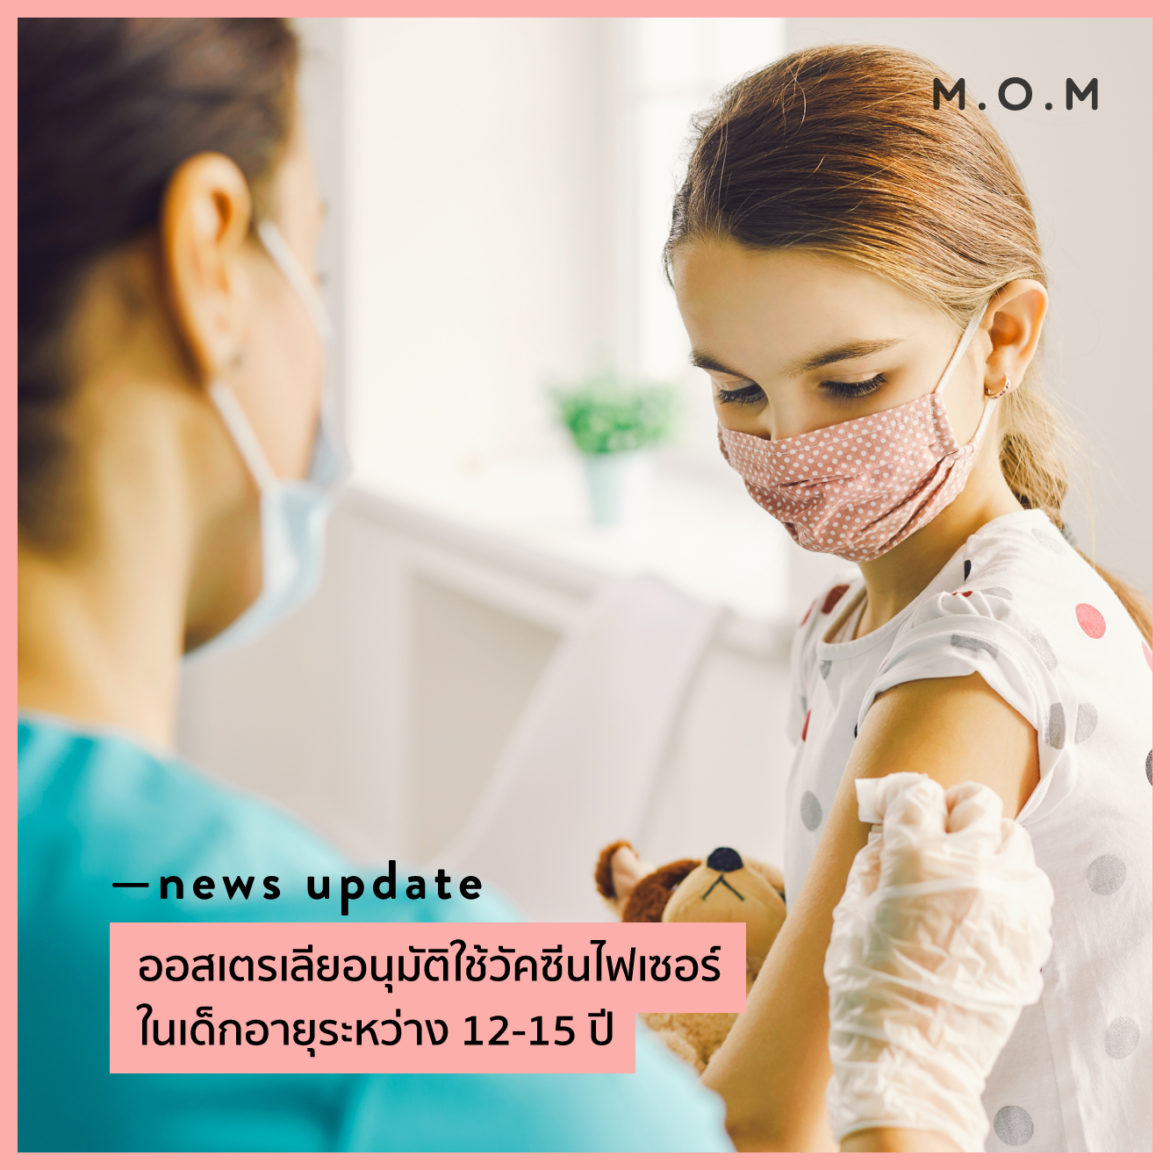 News Update: ออสเตรเลียอนุมัติใช้วัคซีนไฟเซอร์ในเด็กอายุระหว่าง 12-15 ปี -  M.O.M